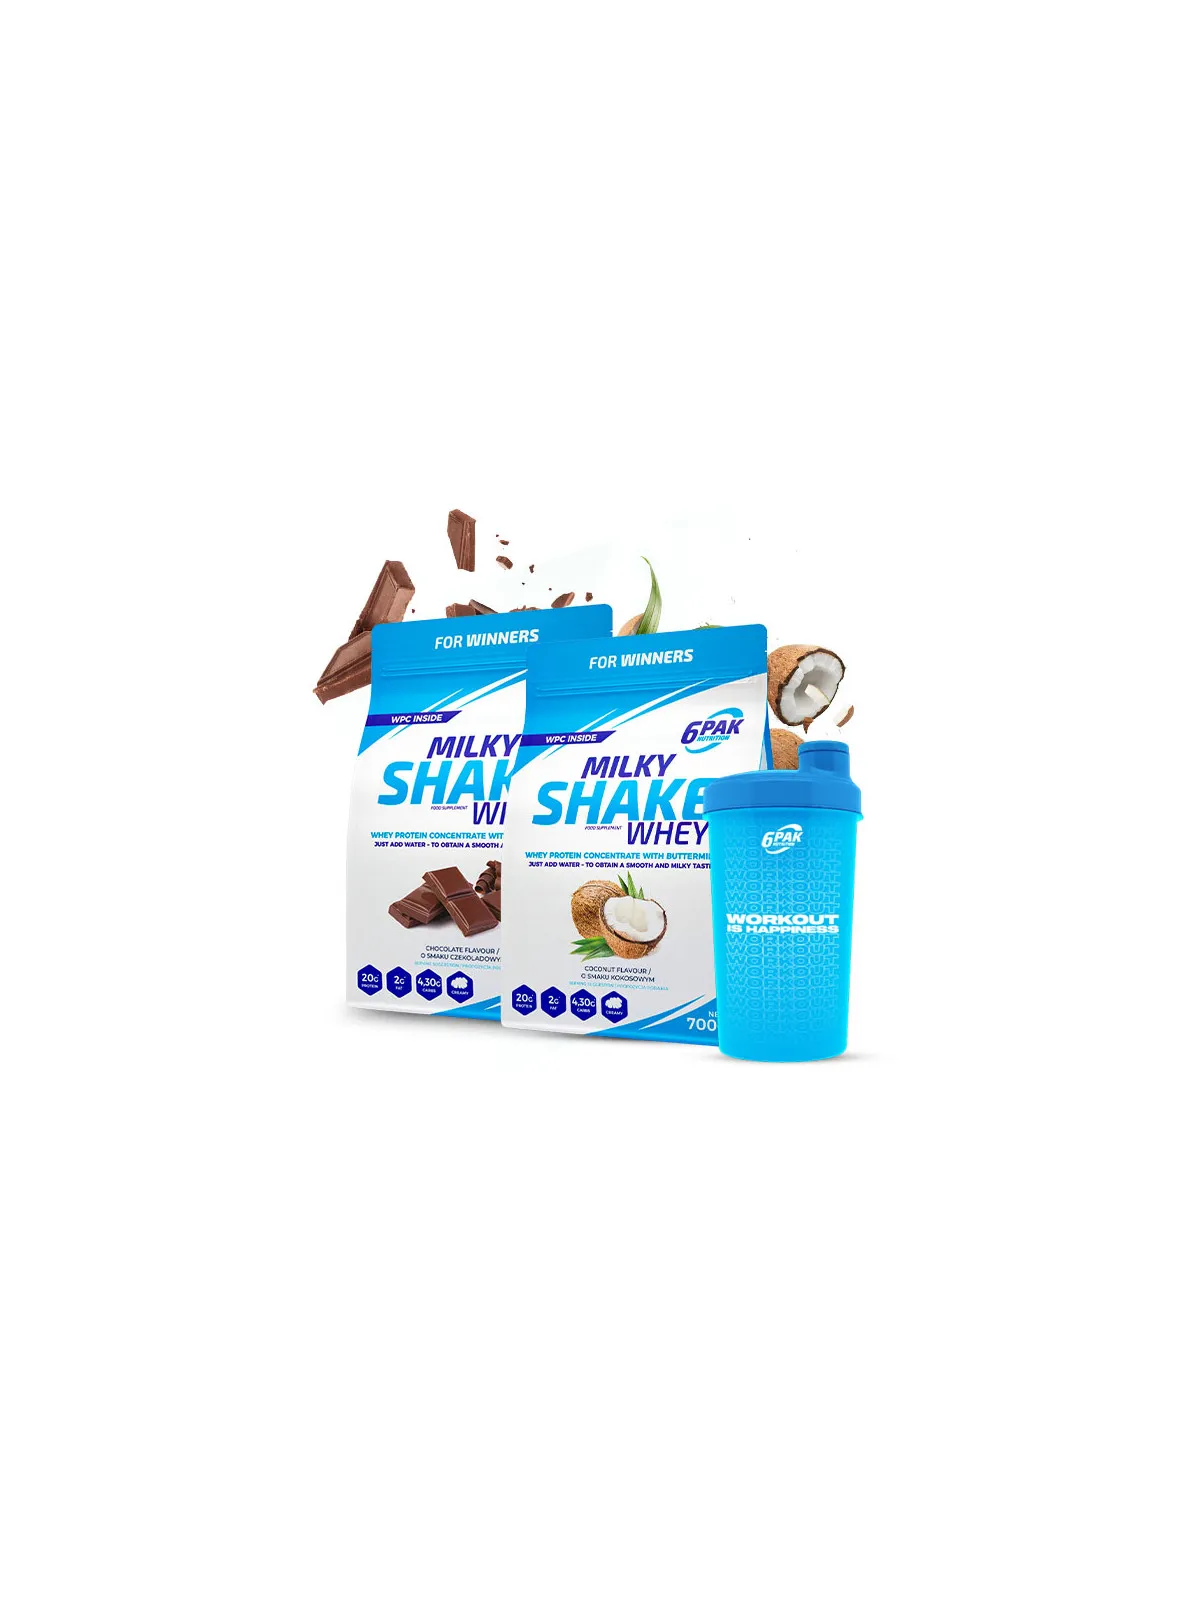 Milky Shake Whey - 2x700g + Shaker FOR FREE!